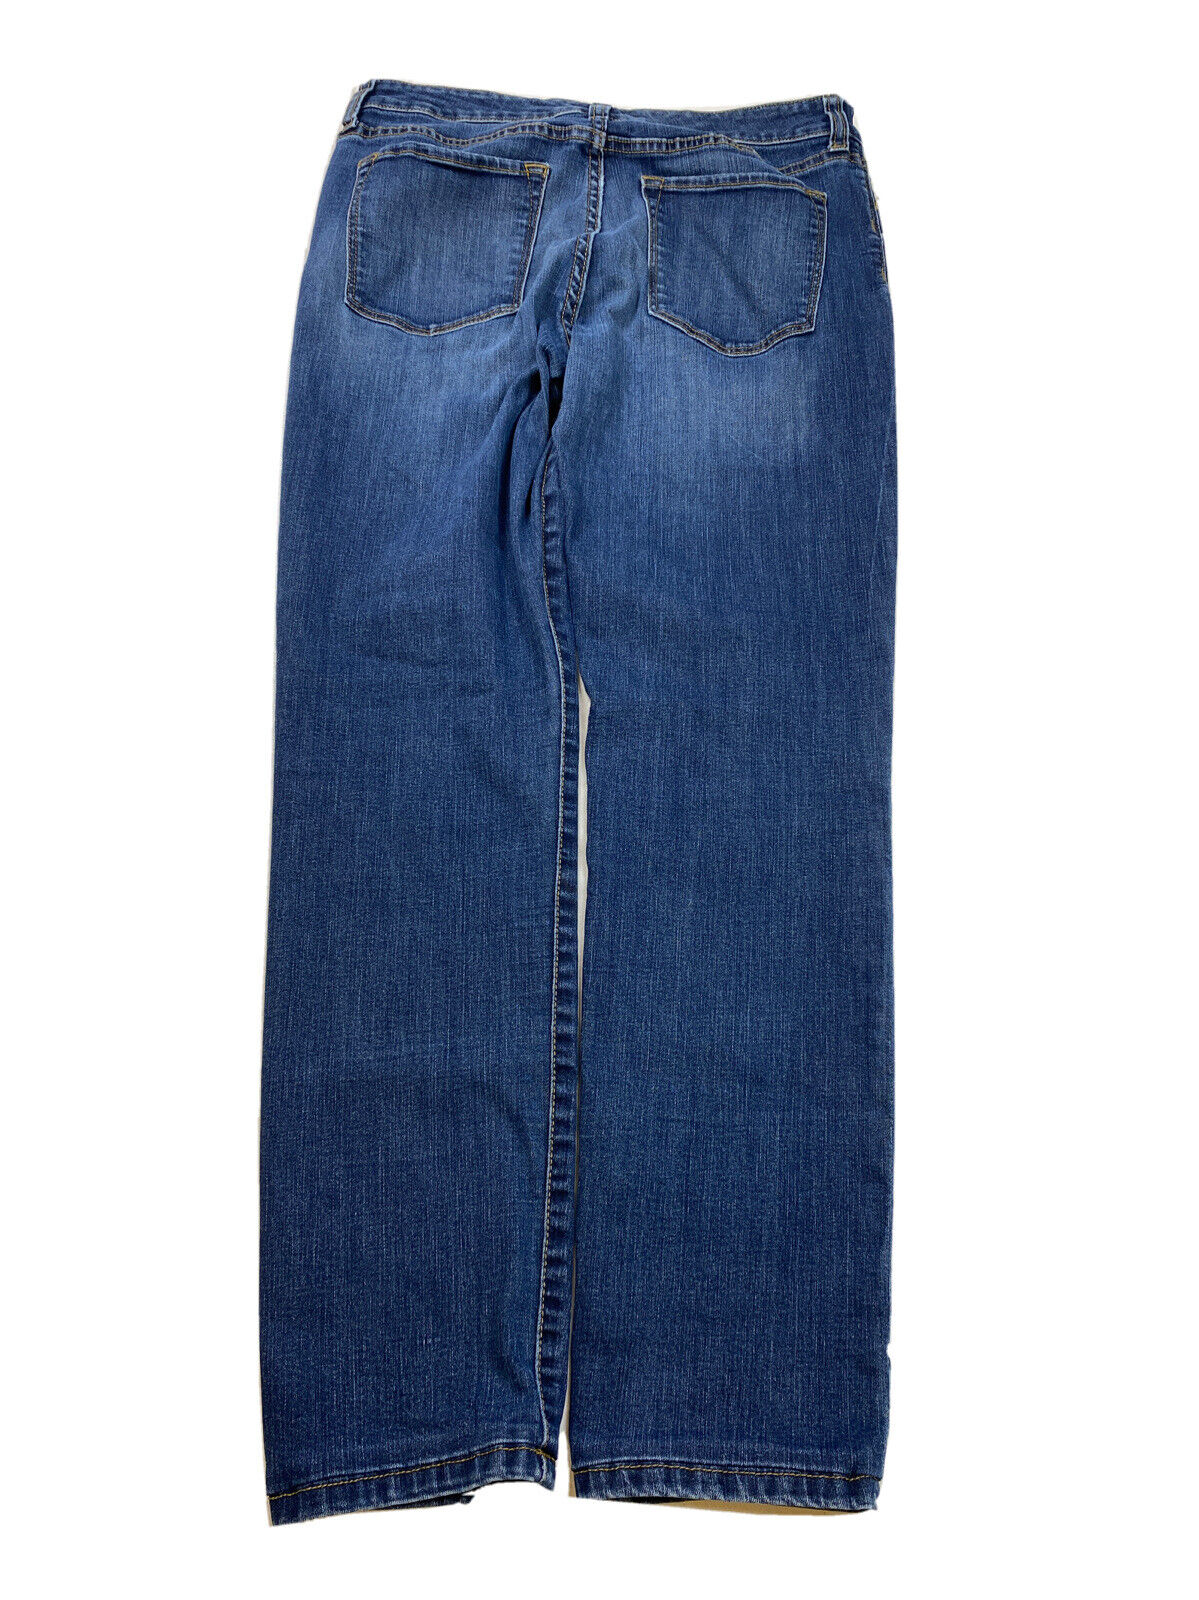 Banana Republic Women's Dark Wash Blue Denim Stretch Skinny Jeans - 30/10